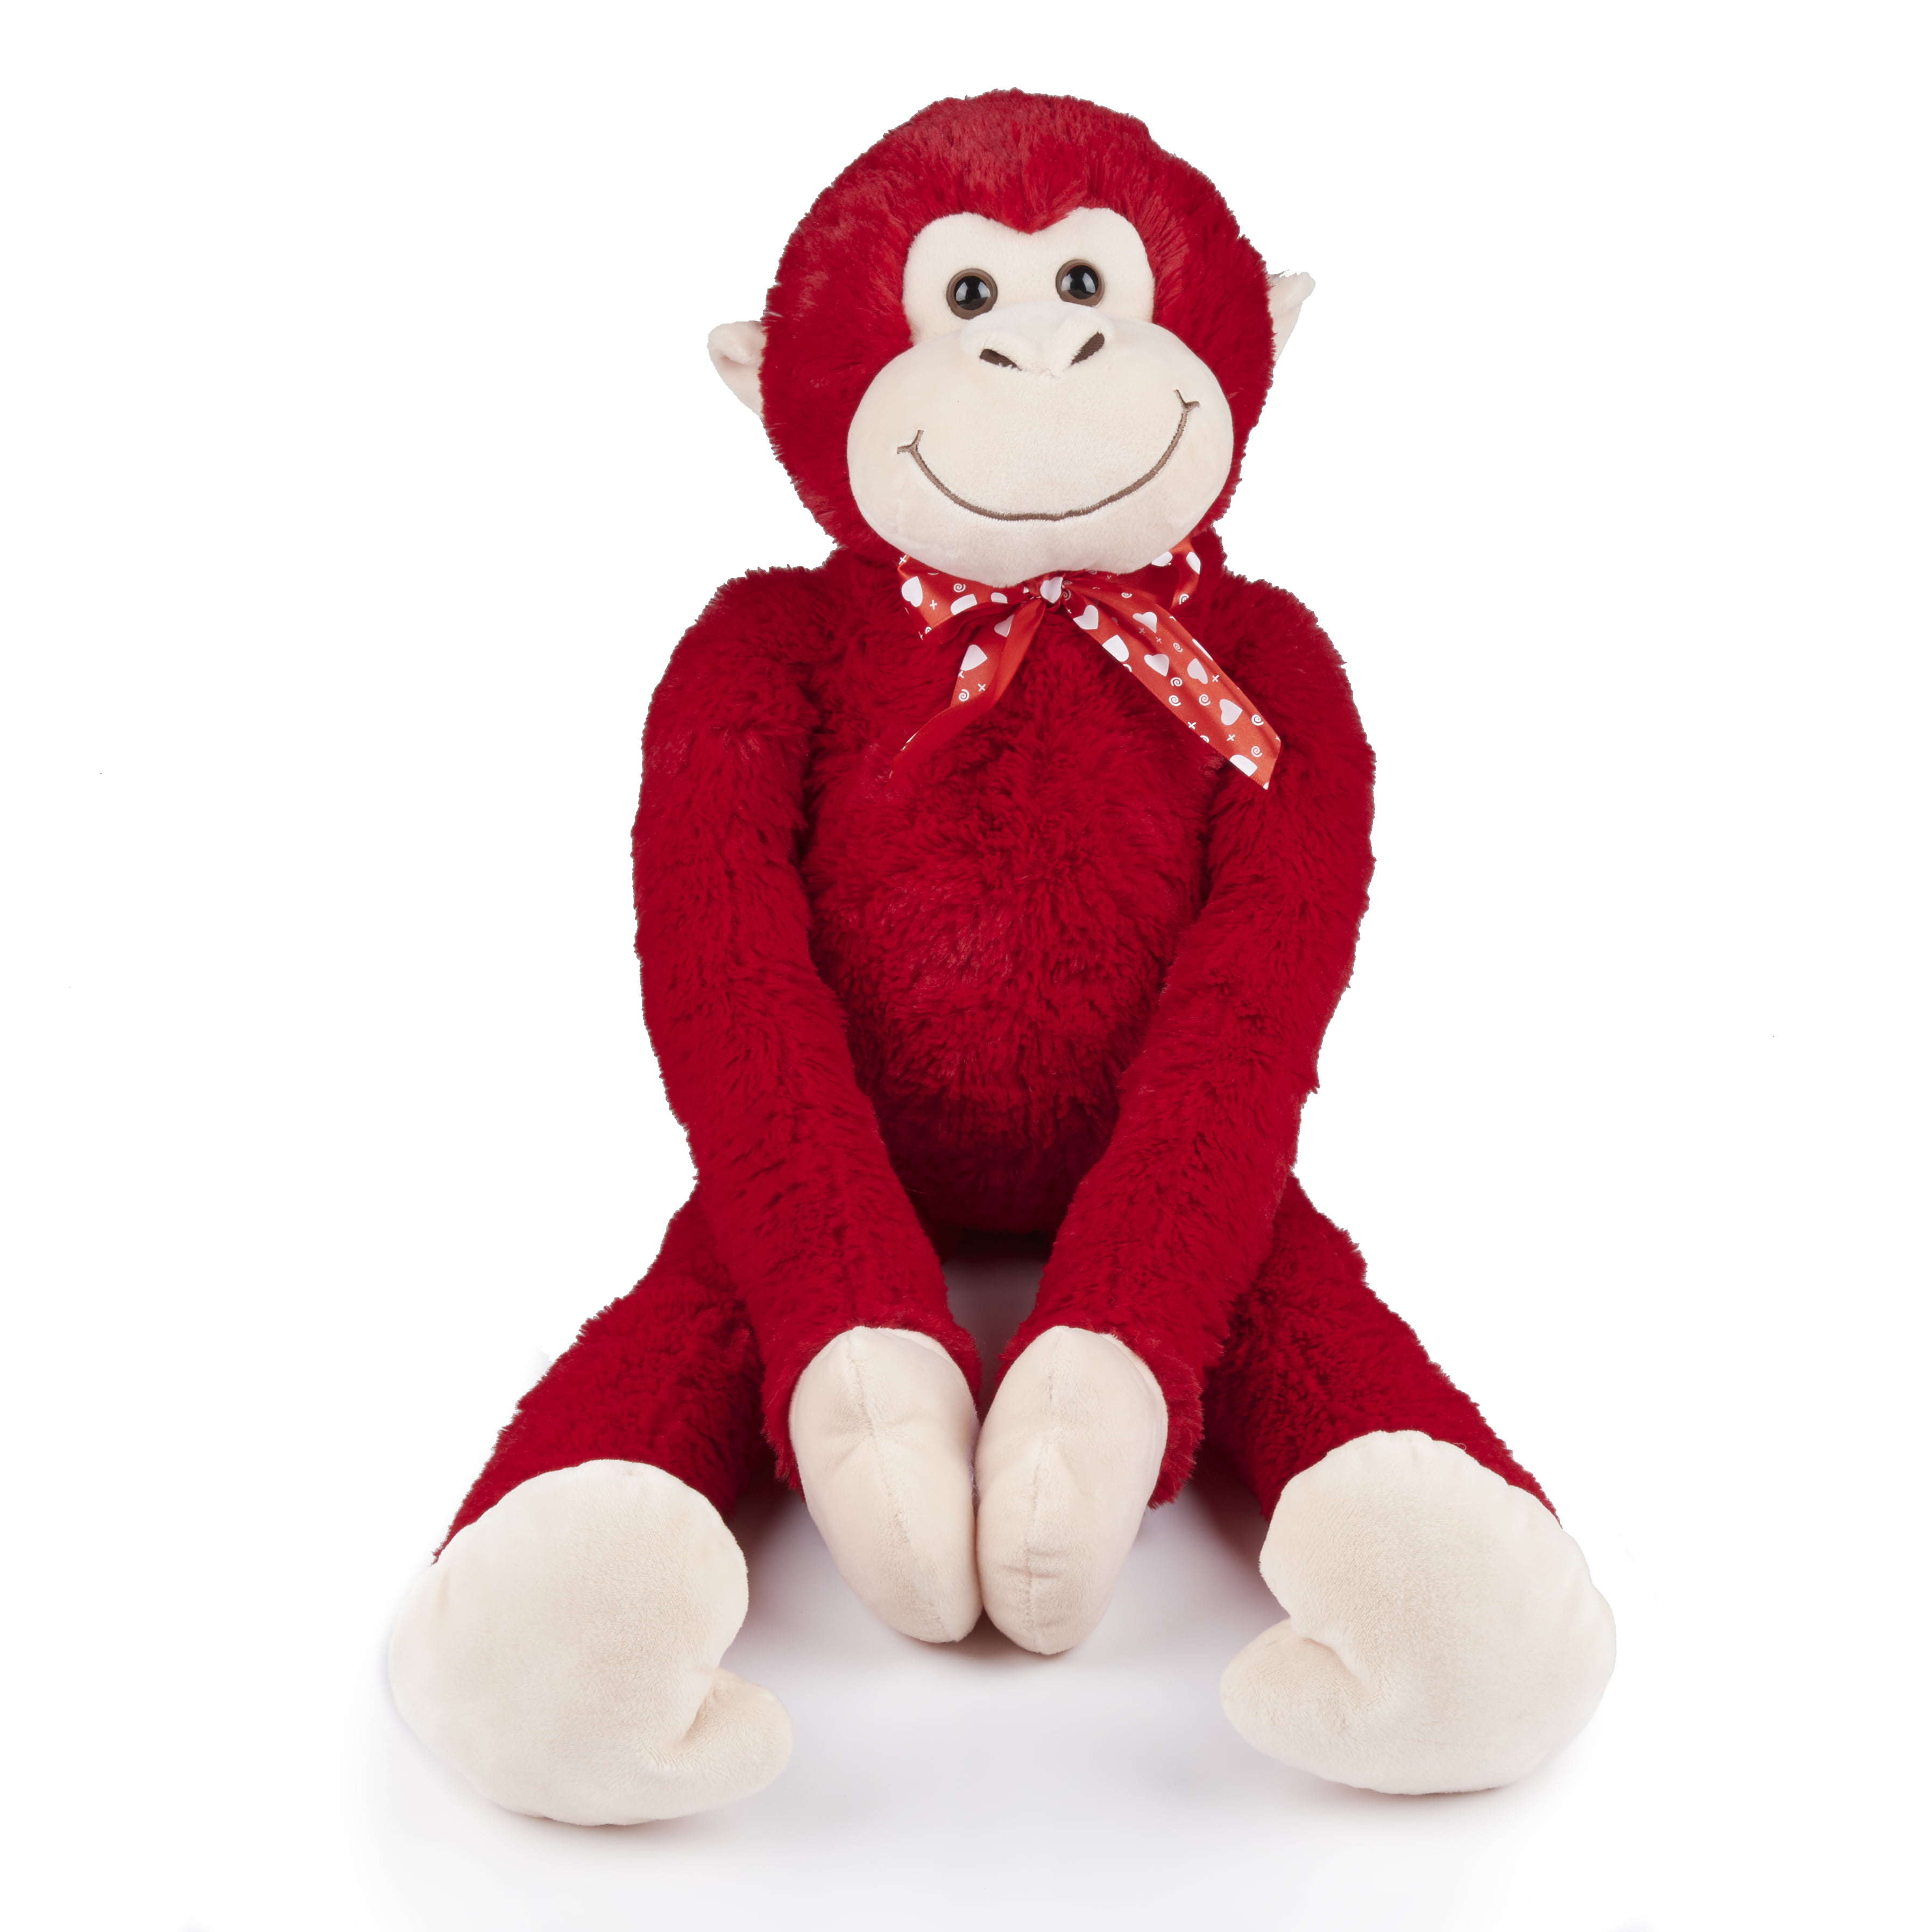 New 2 Monkeys Plush Stuffed Animal 4.5 In Valentine's Day Stuffed Monkeys 